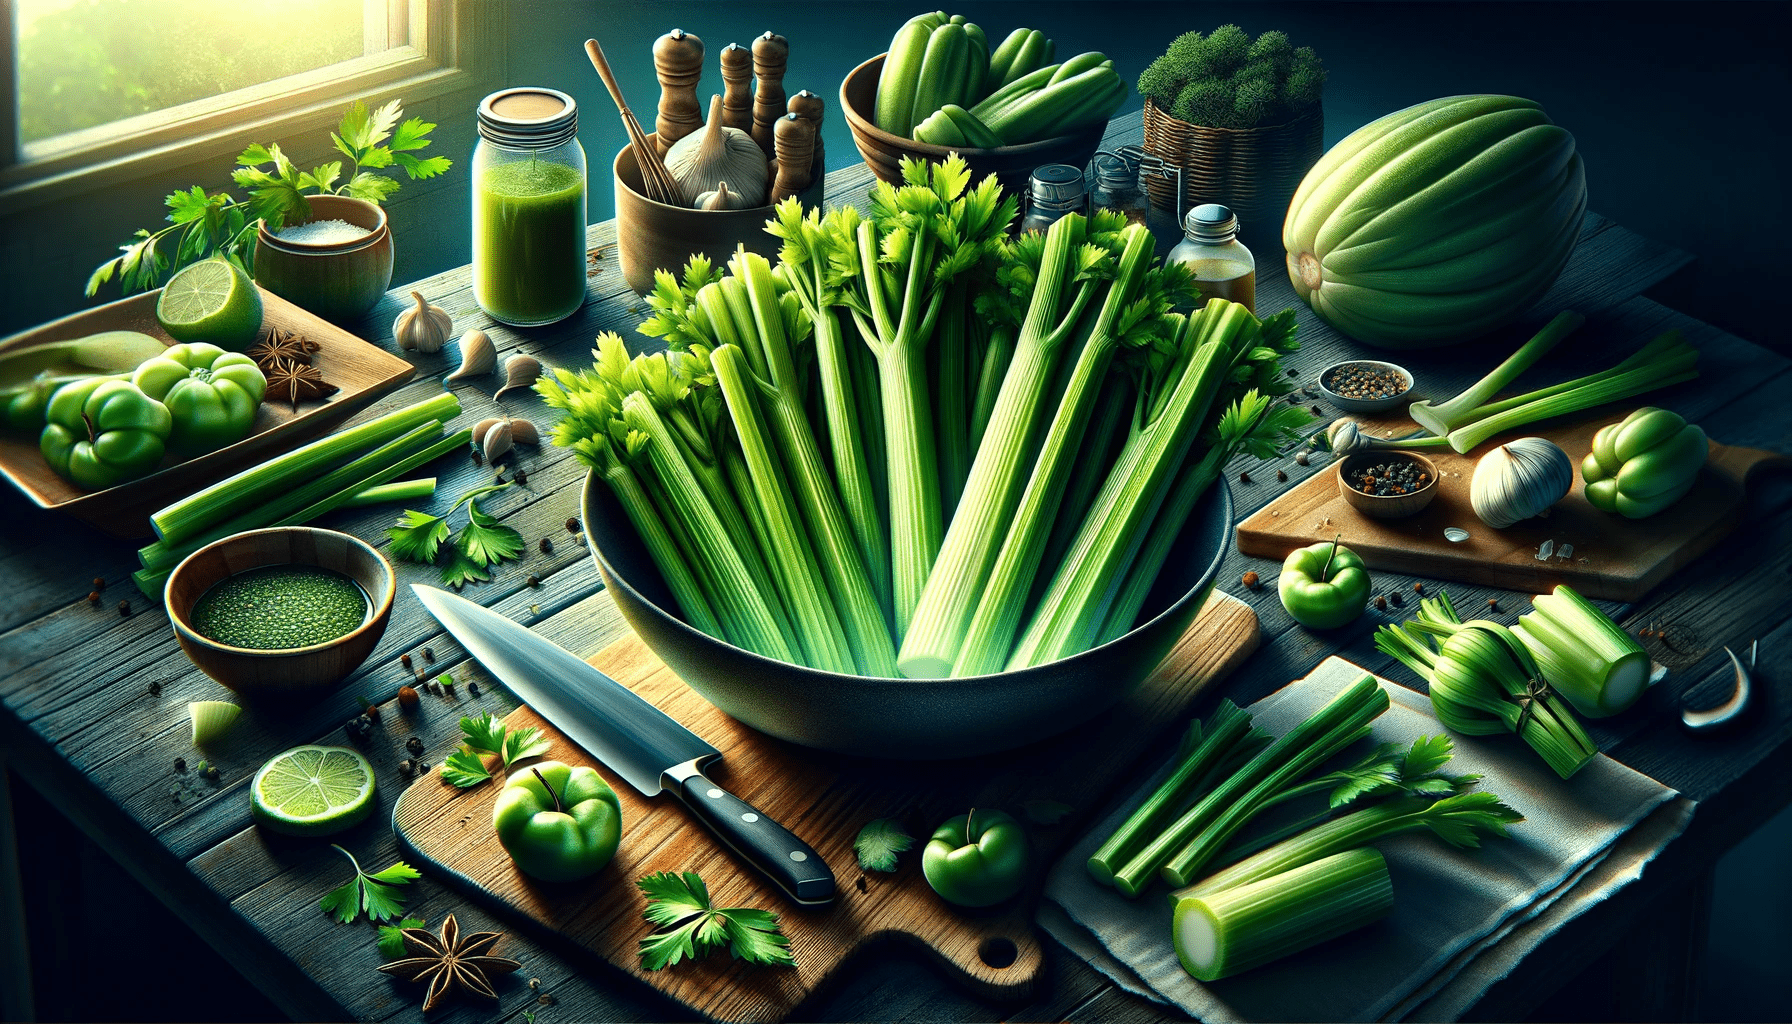 Celery branch : Nutritional Benefits